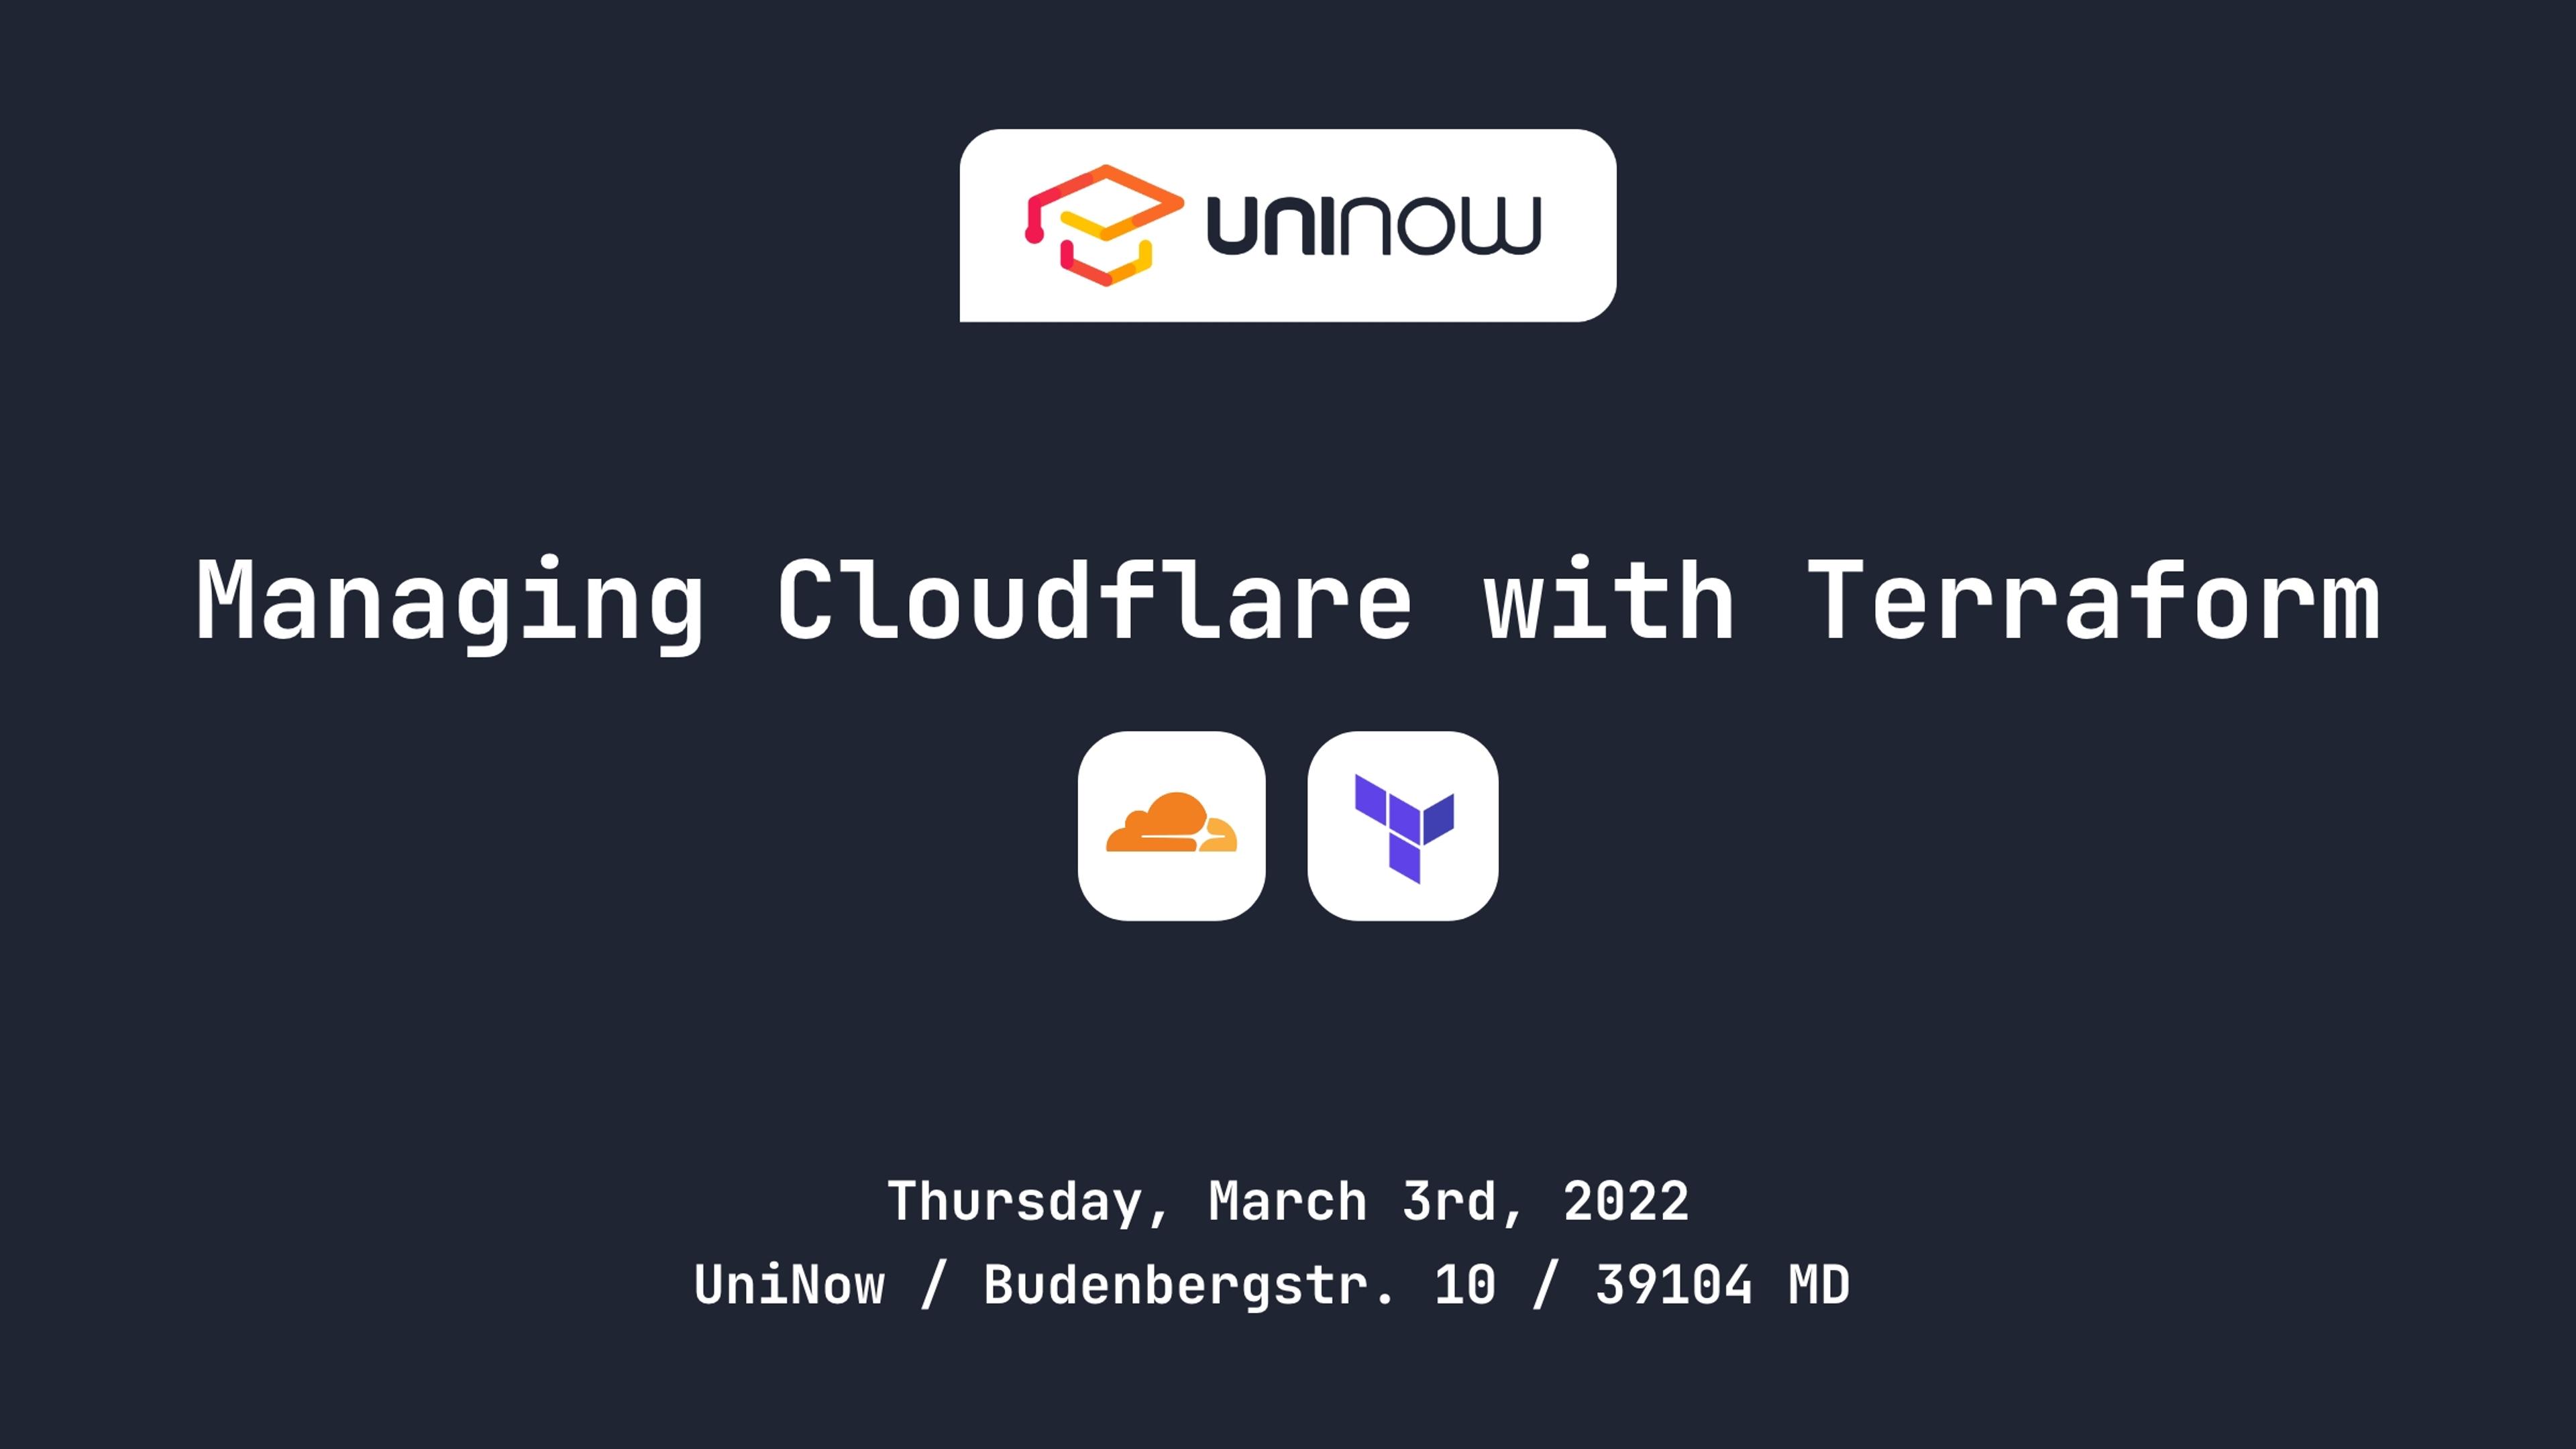 Managing Cloudflare with Terraform